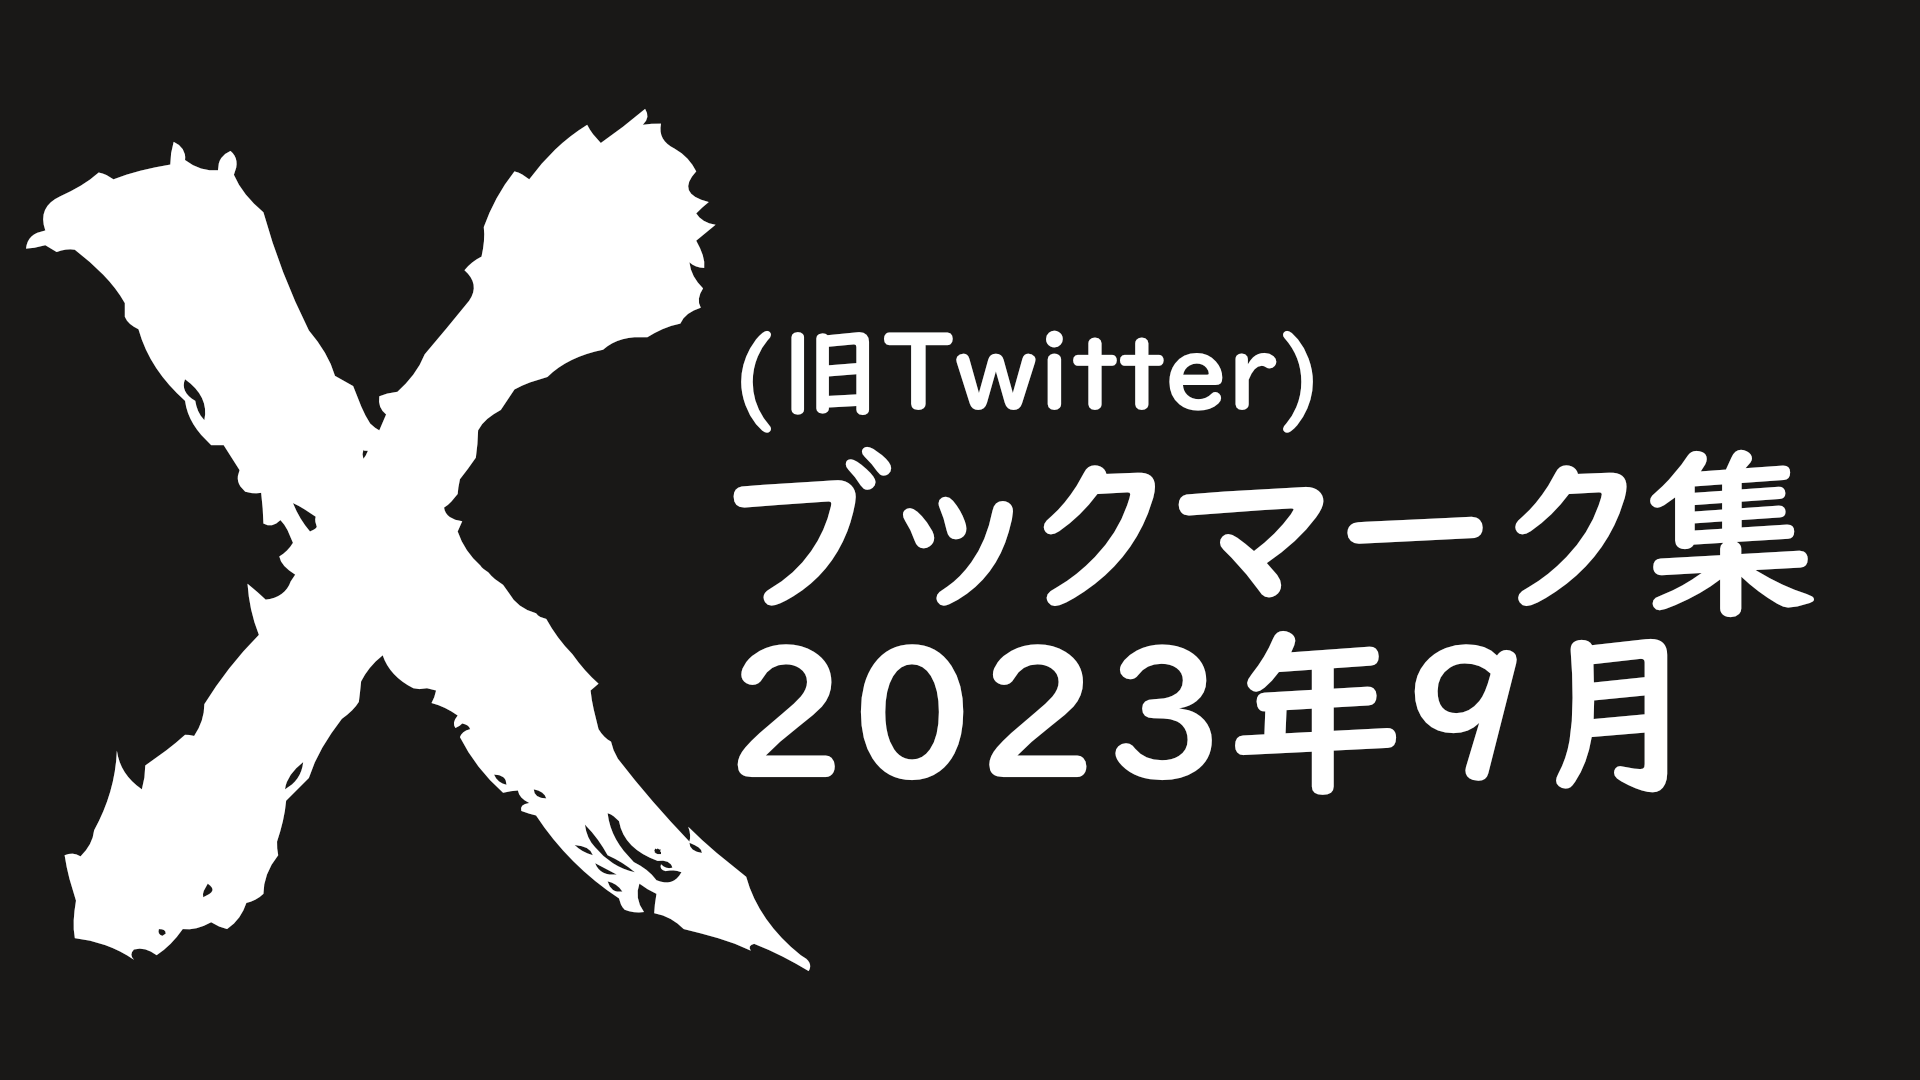 X（Twitter）202309